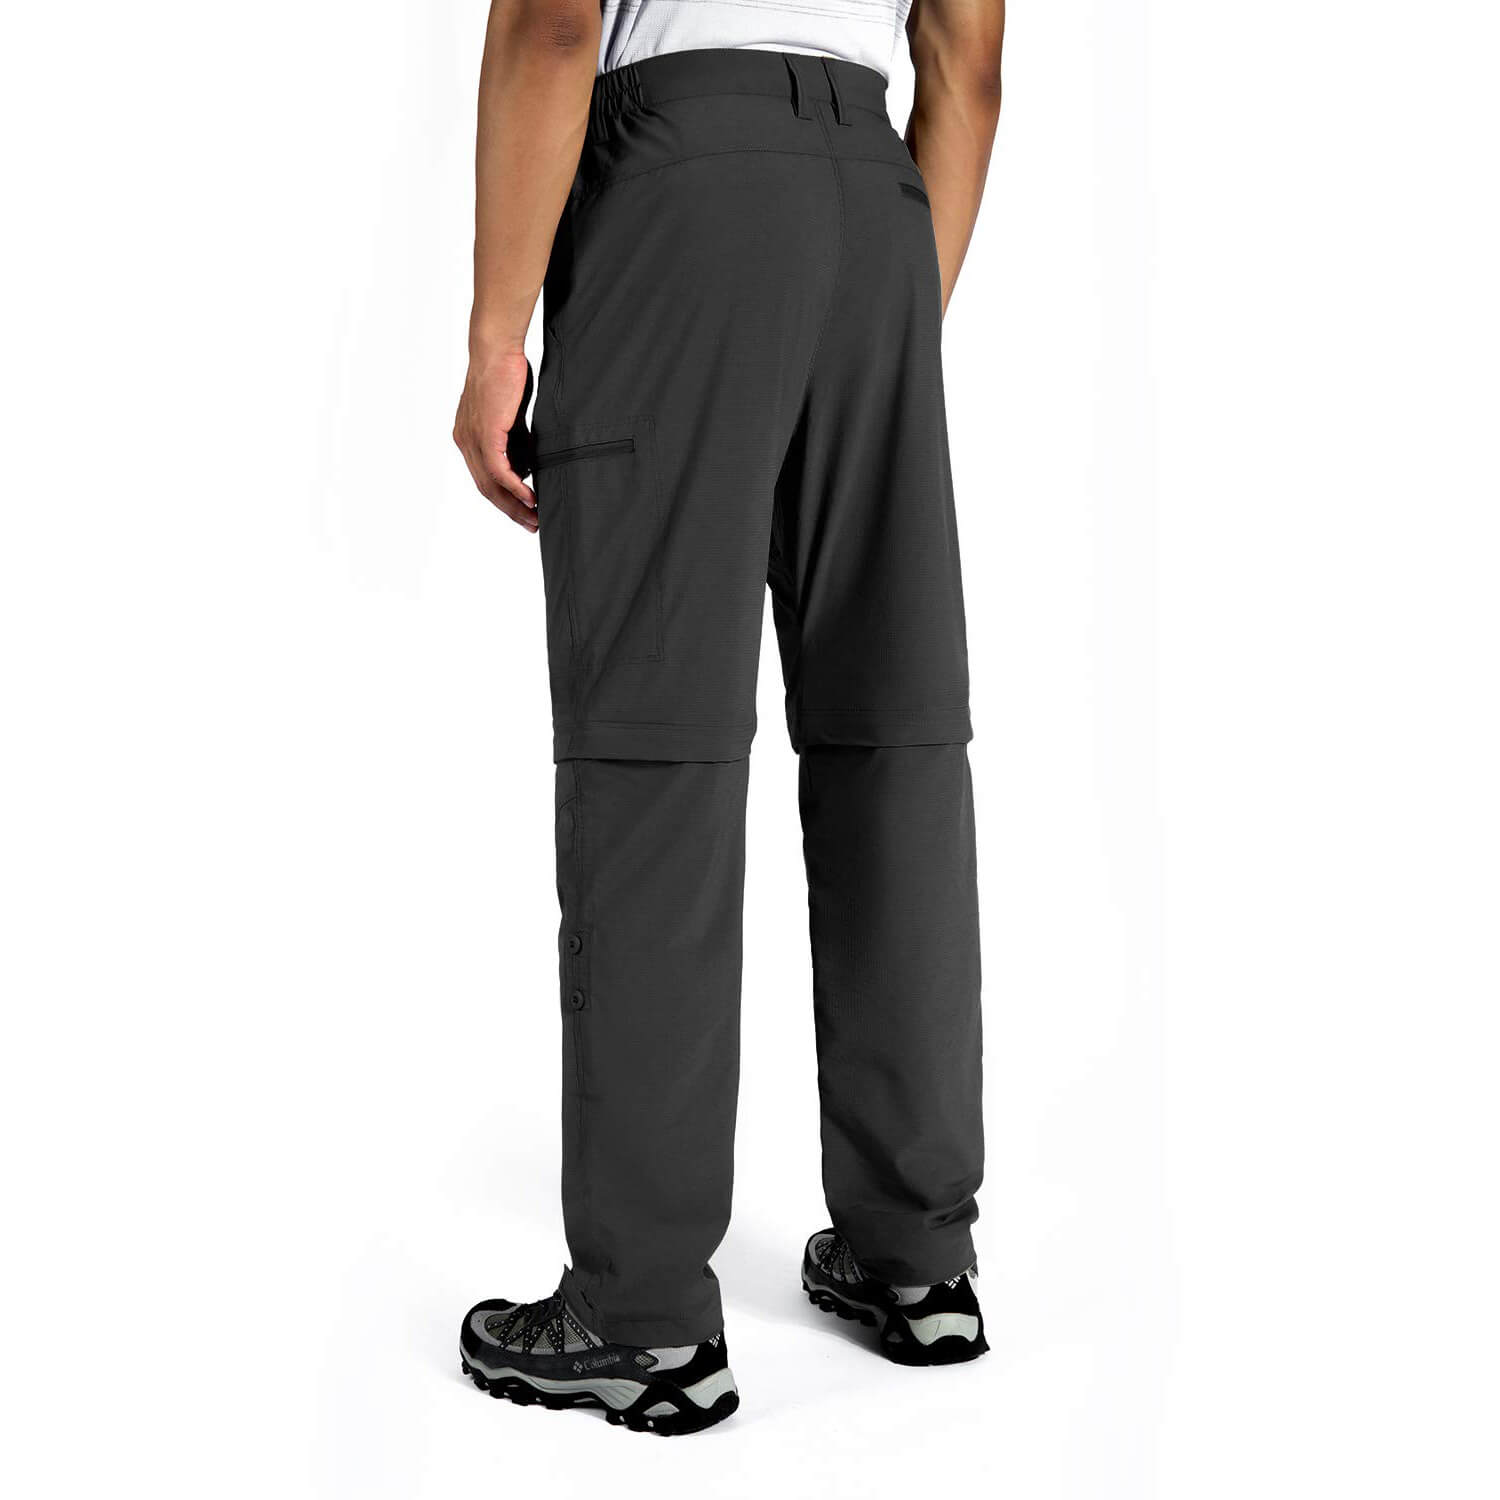 Hiauspor Men's Convertible Hiking Pants Quick Dry Zip Off Cargo Pants for Fishing Dark Grey / L